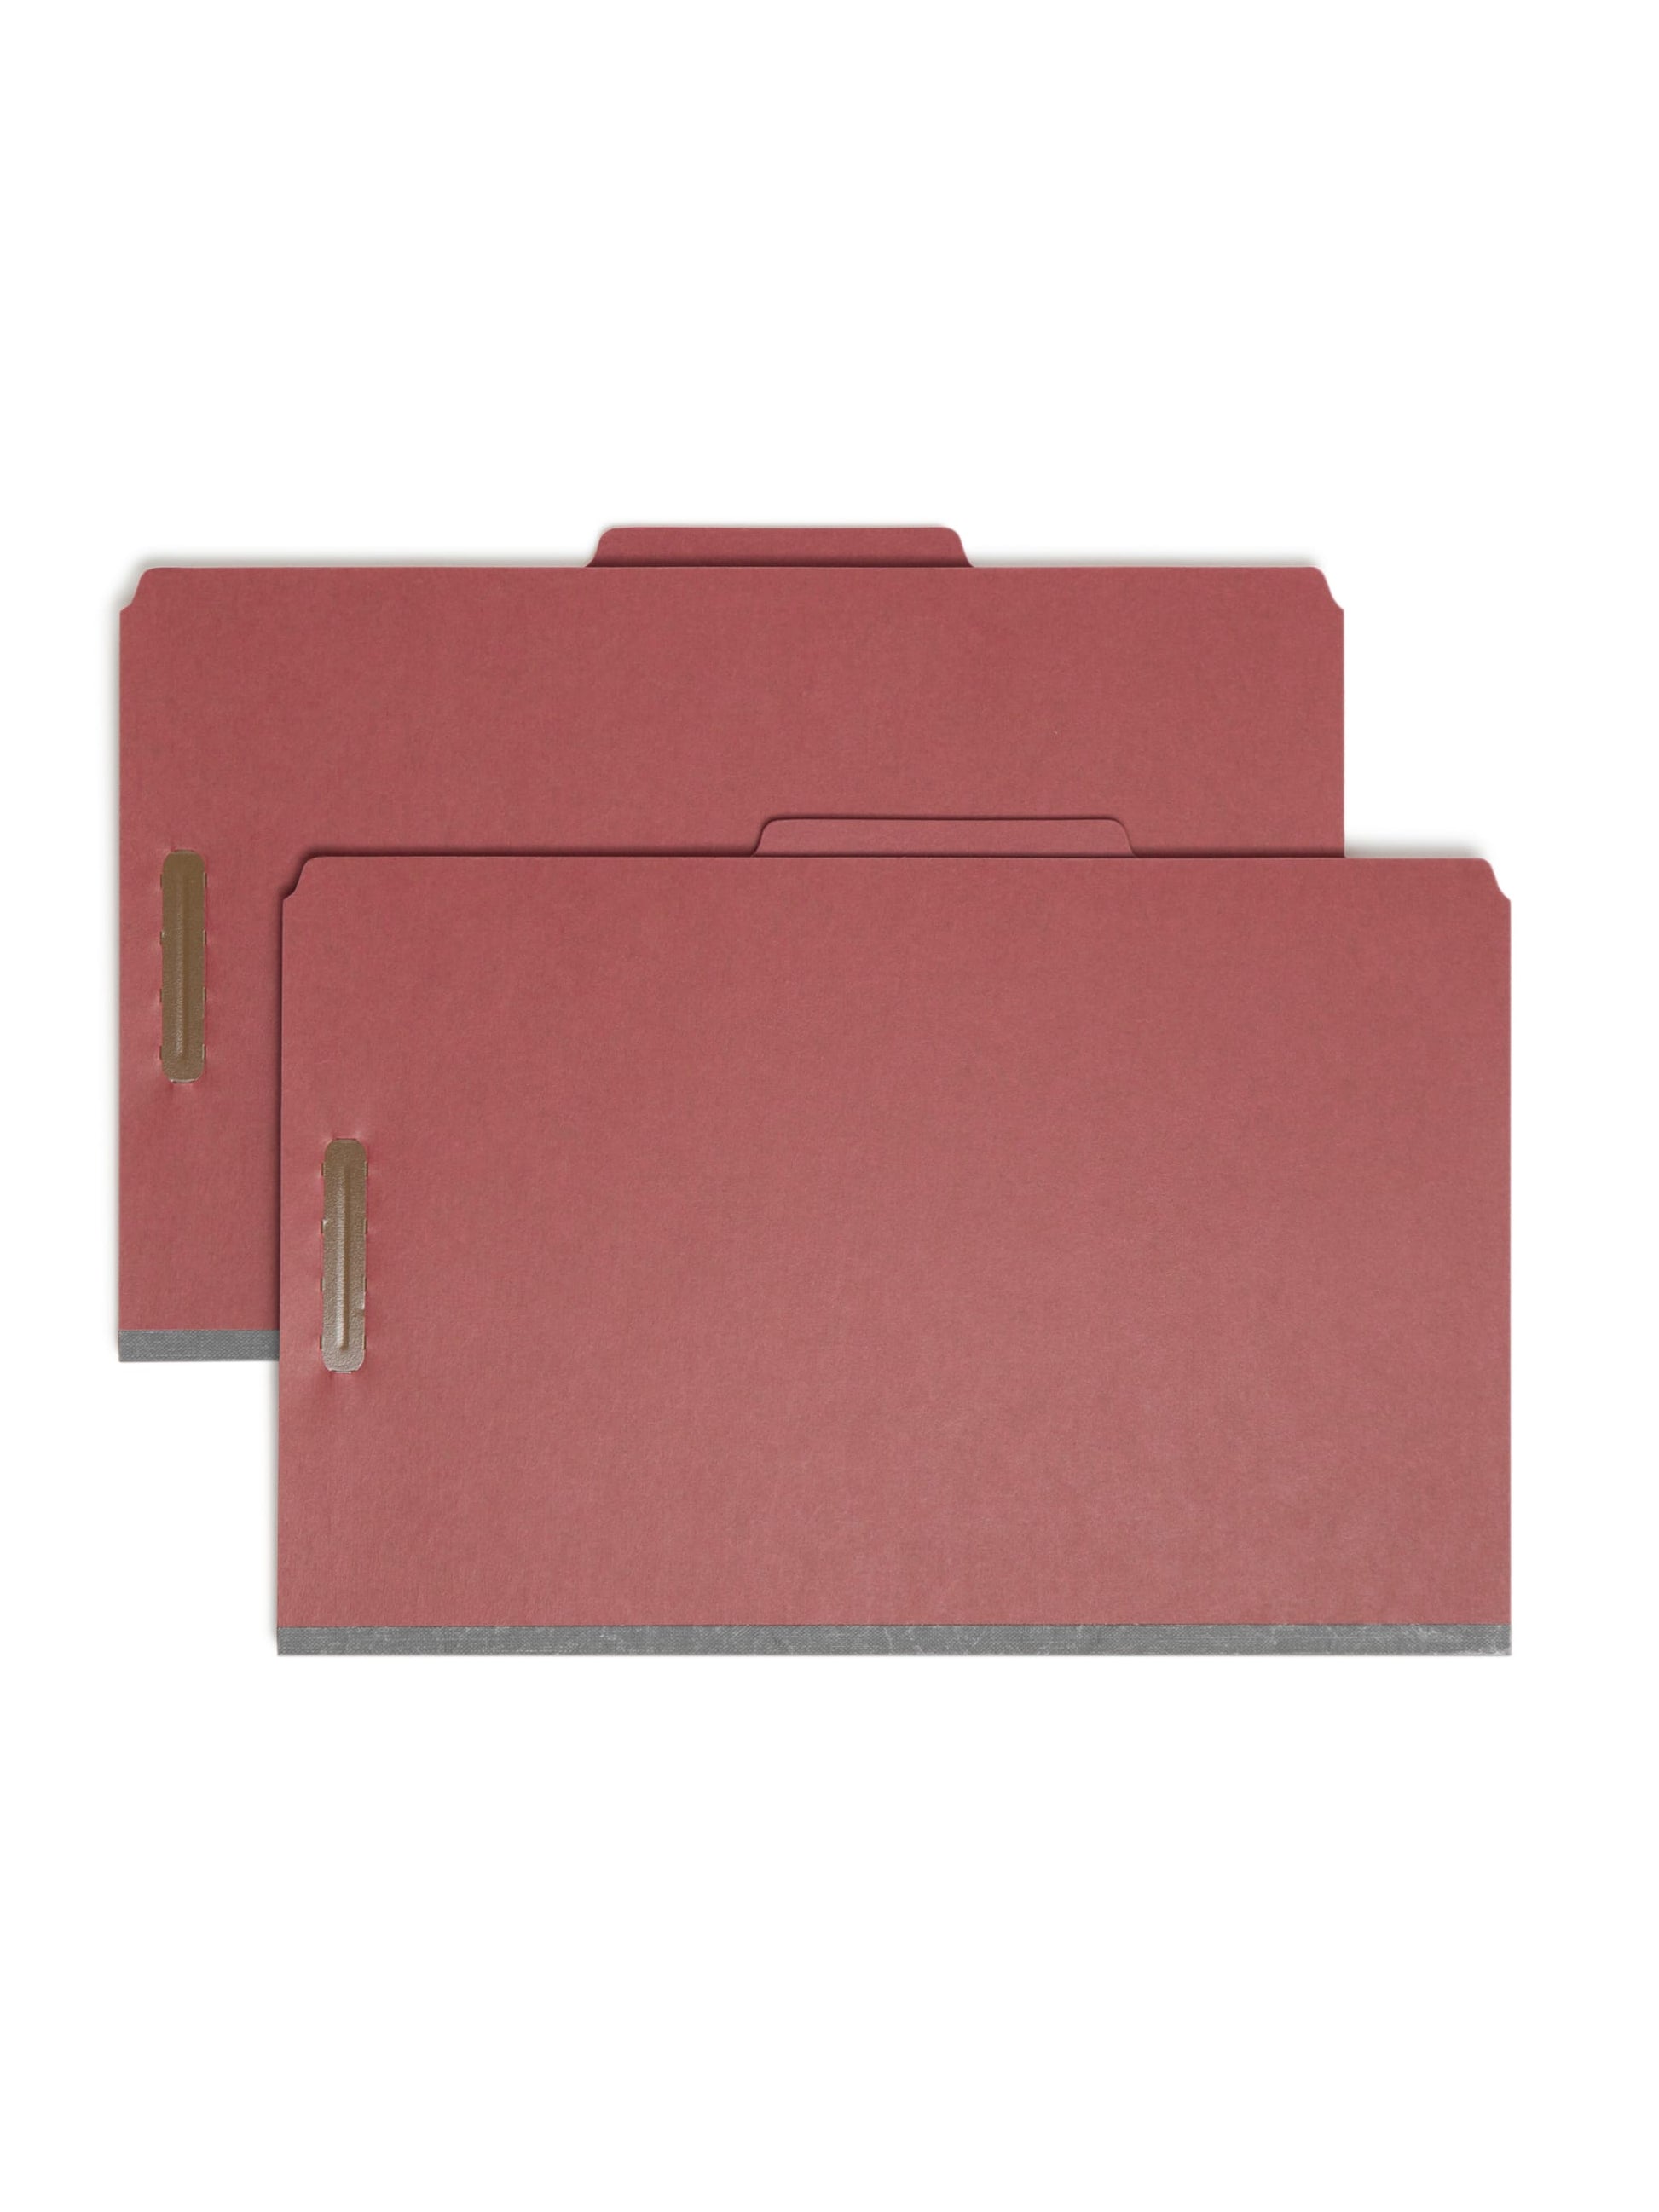 Smead Pressboard Classification File Folders, 1 Divider, 2 inch